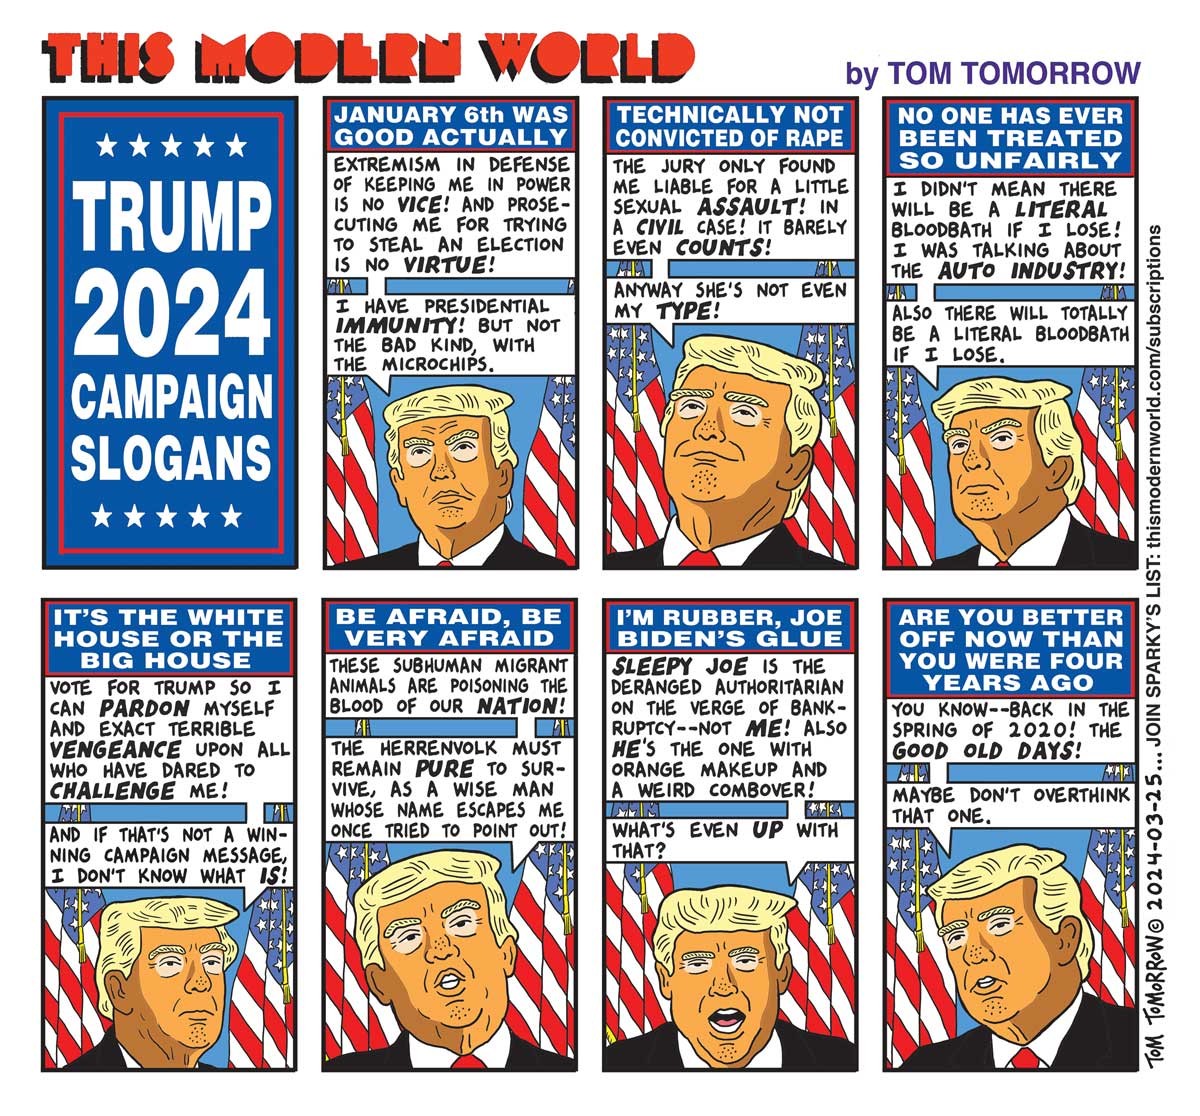 Trump campaign slogans